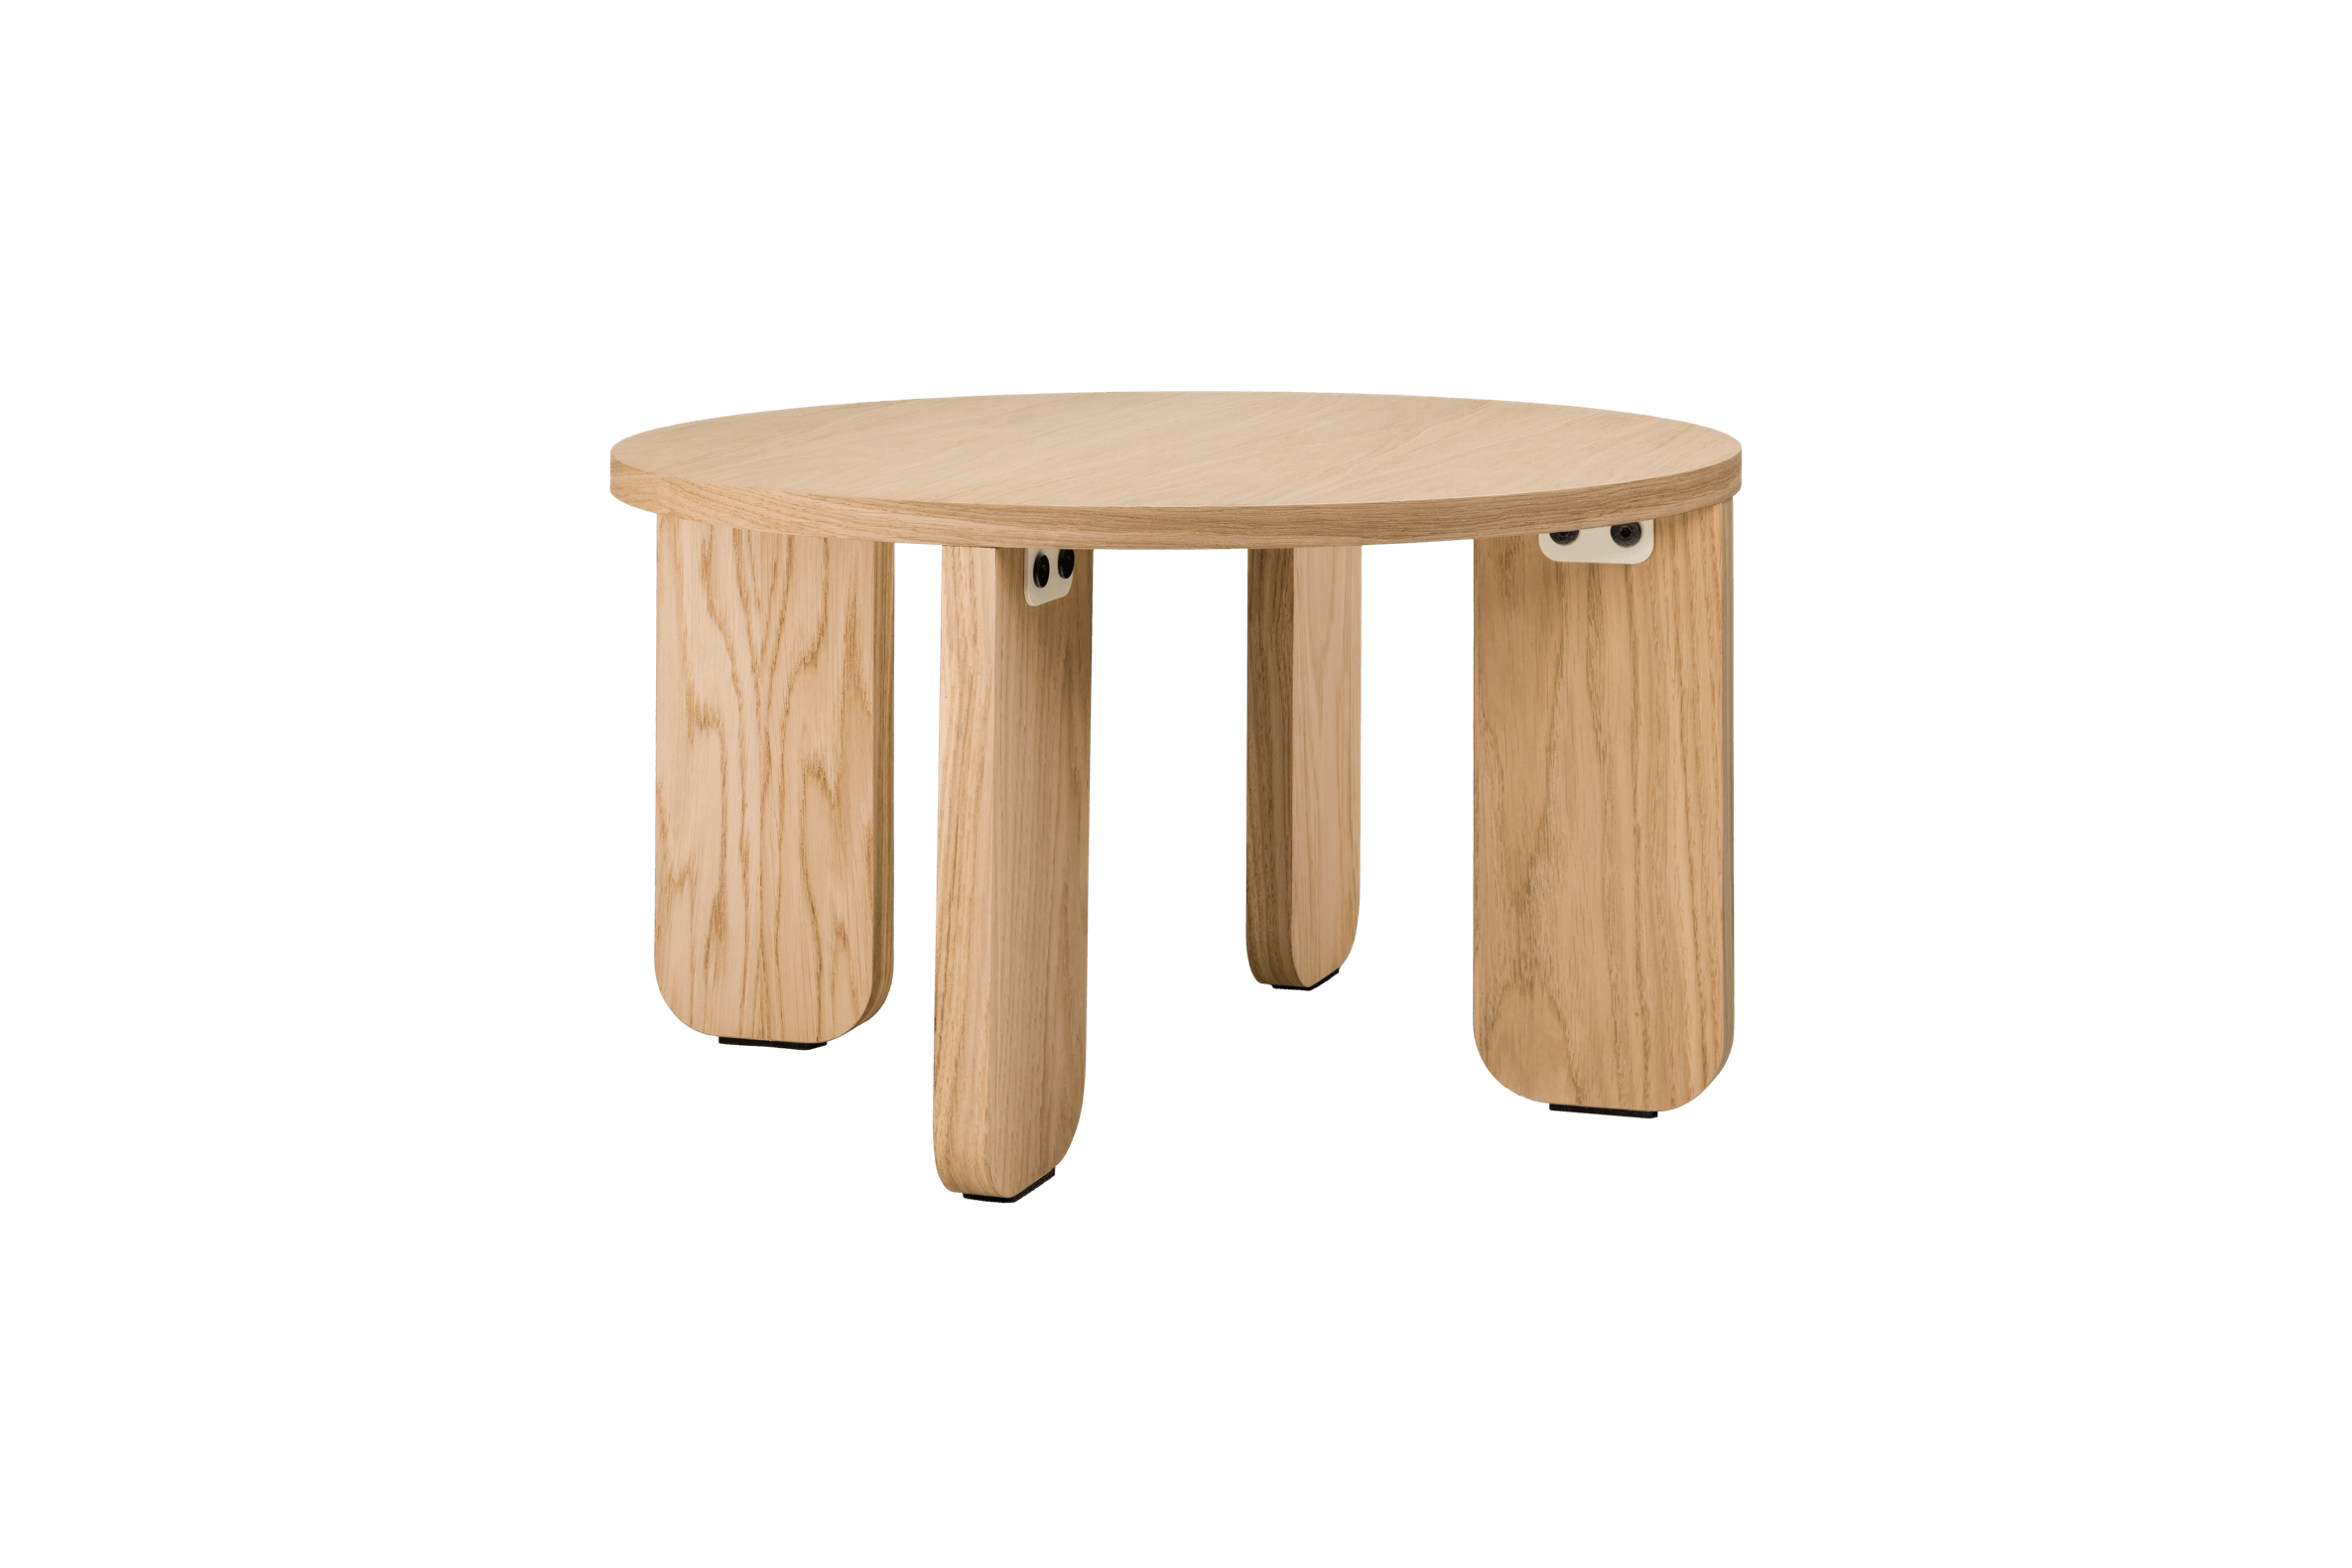 Kuvu Nest of Tables